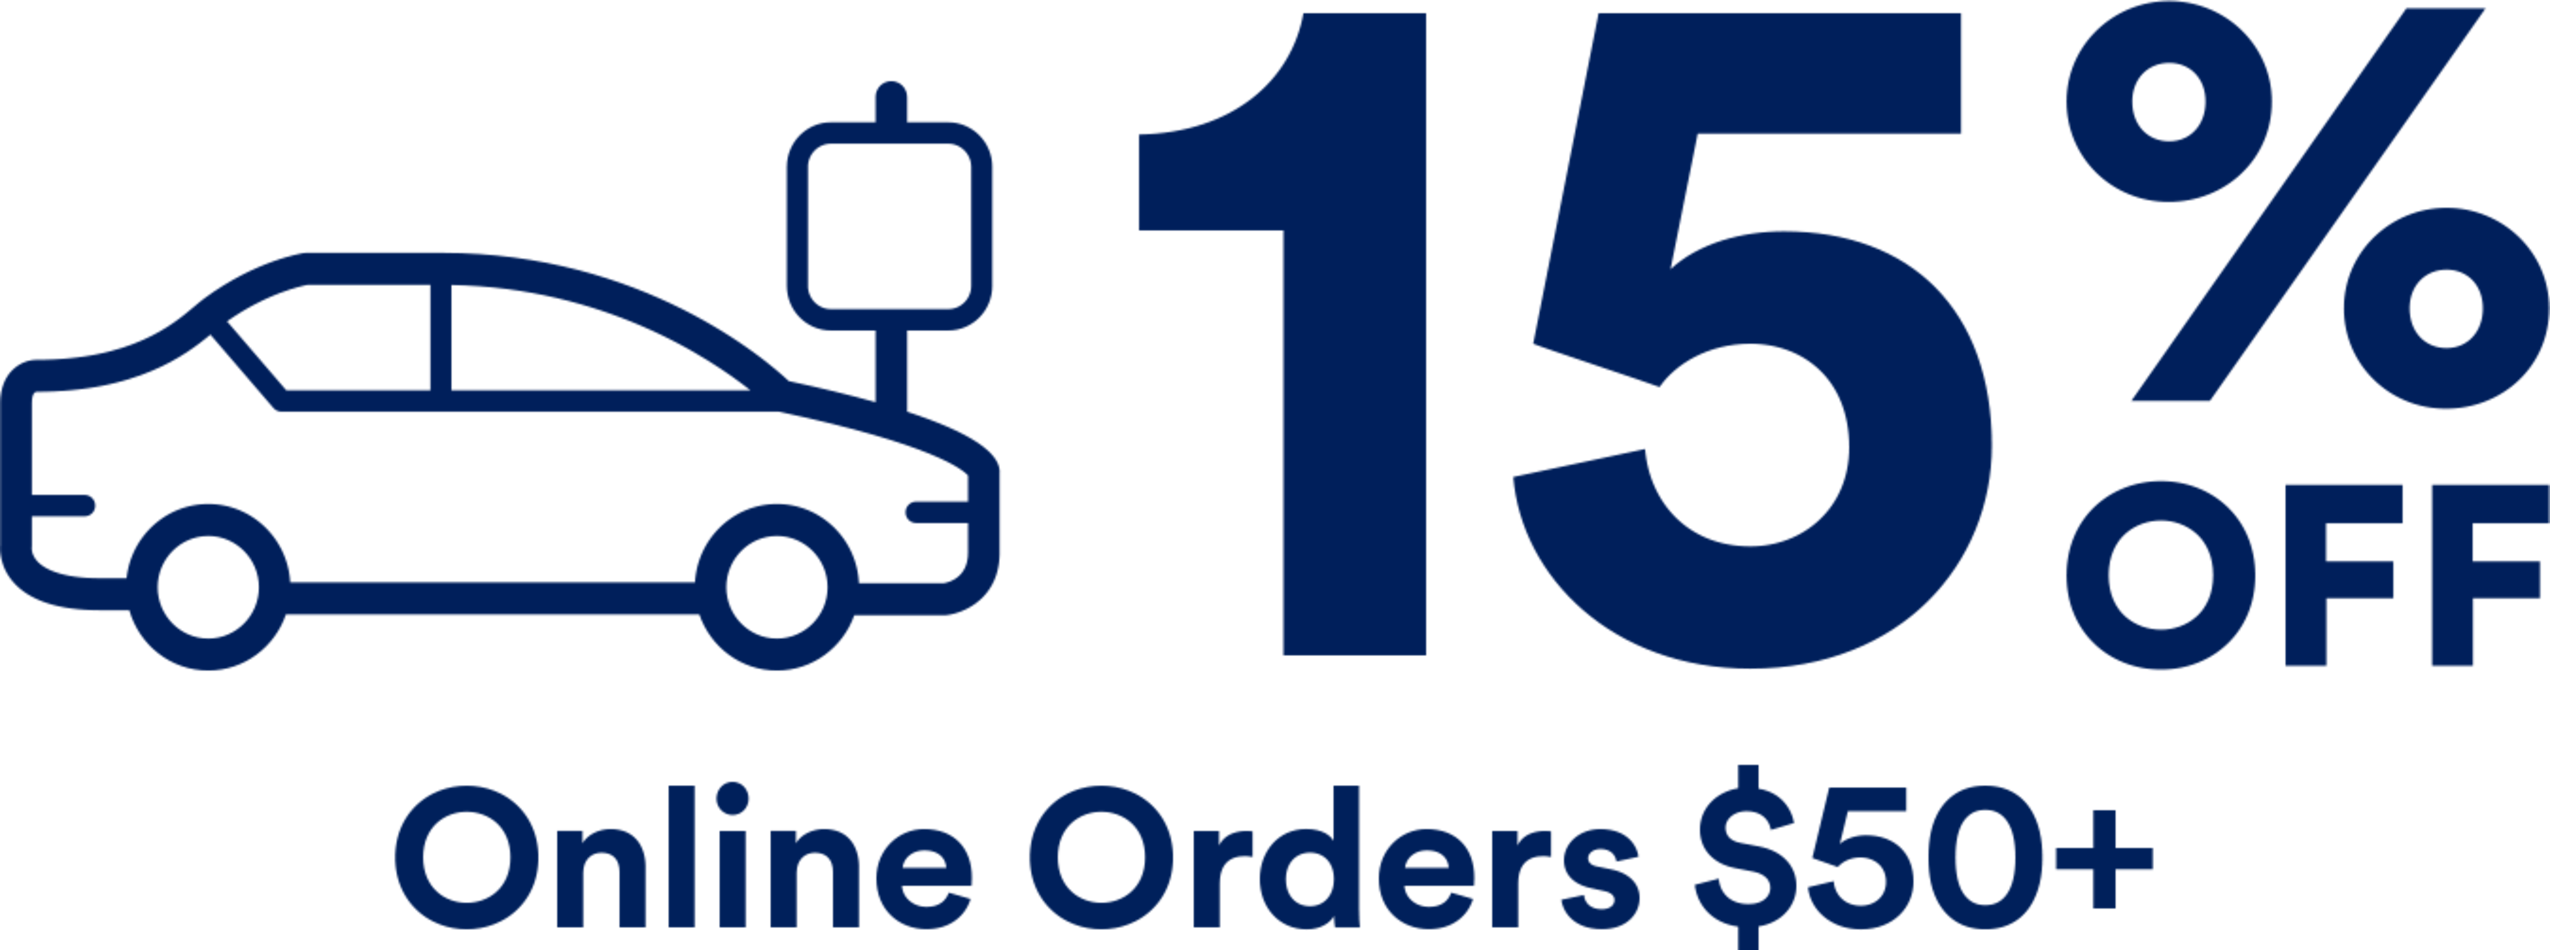 15% off Online Orders $50+.